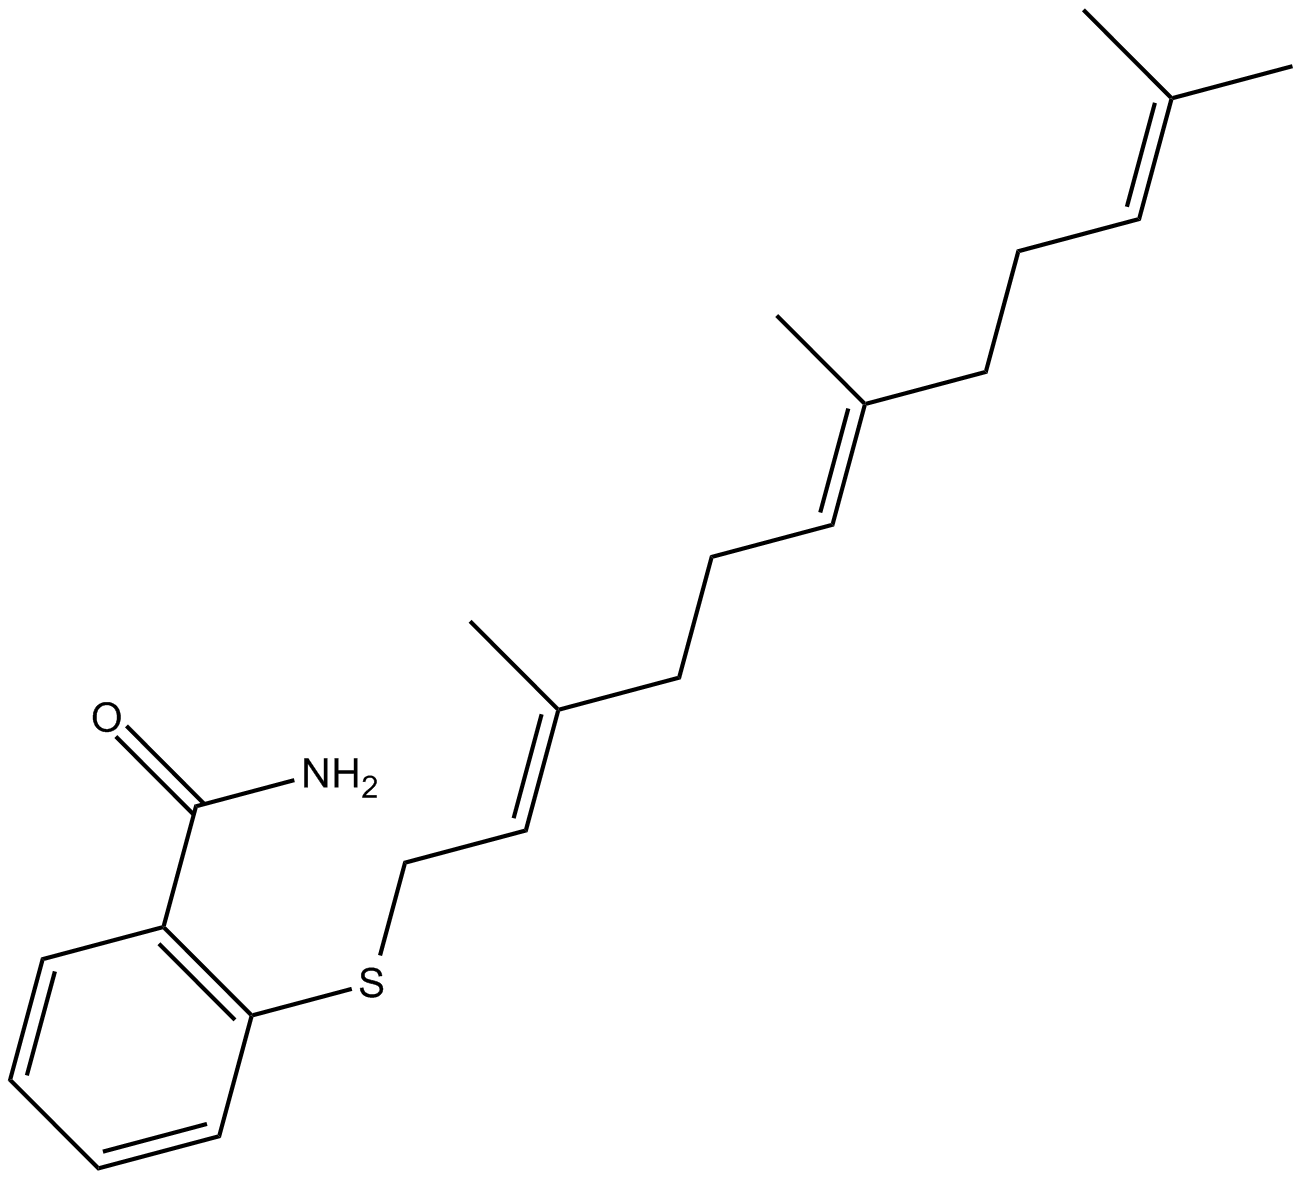 Farnesyl Thiosalicylic Acid Amide  Chemical Structure